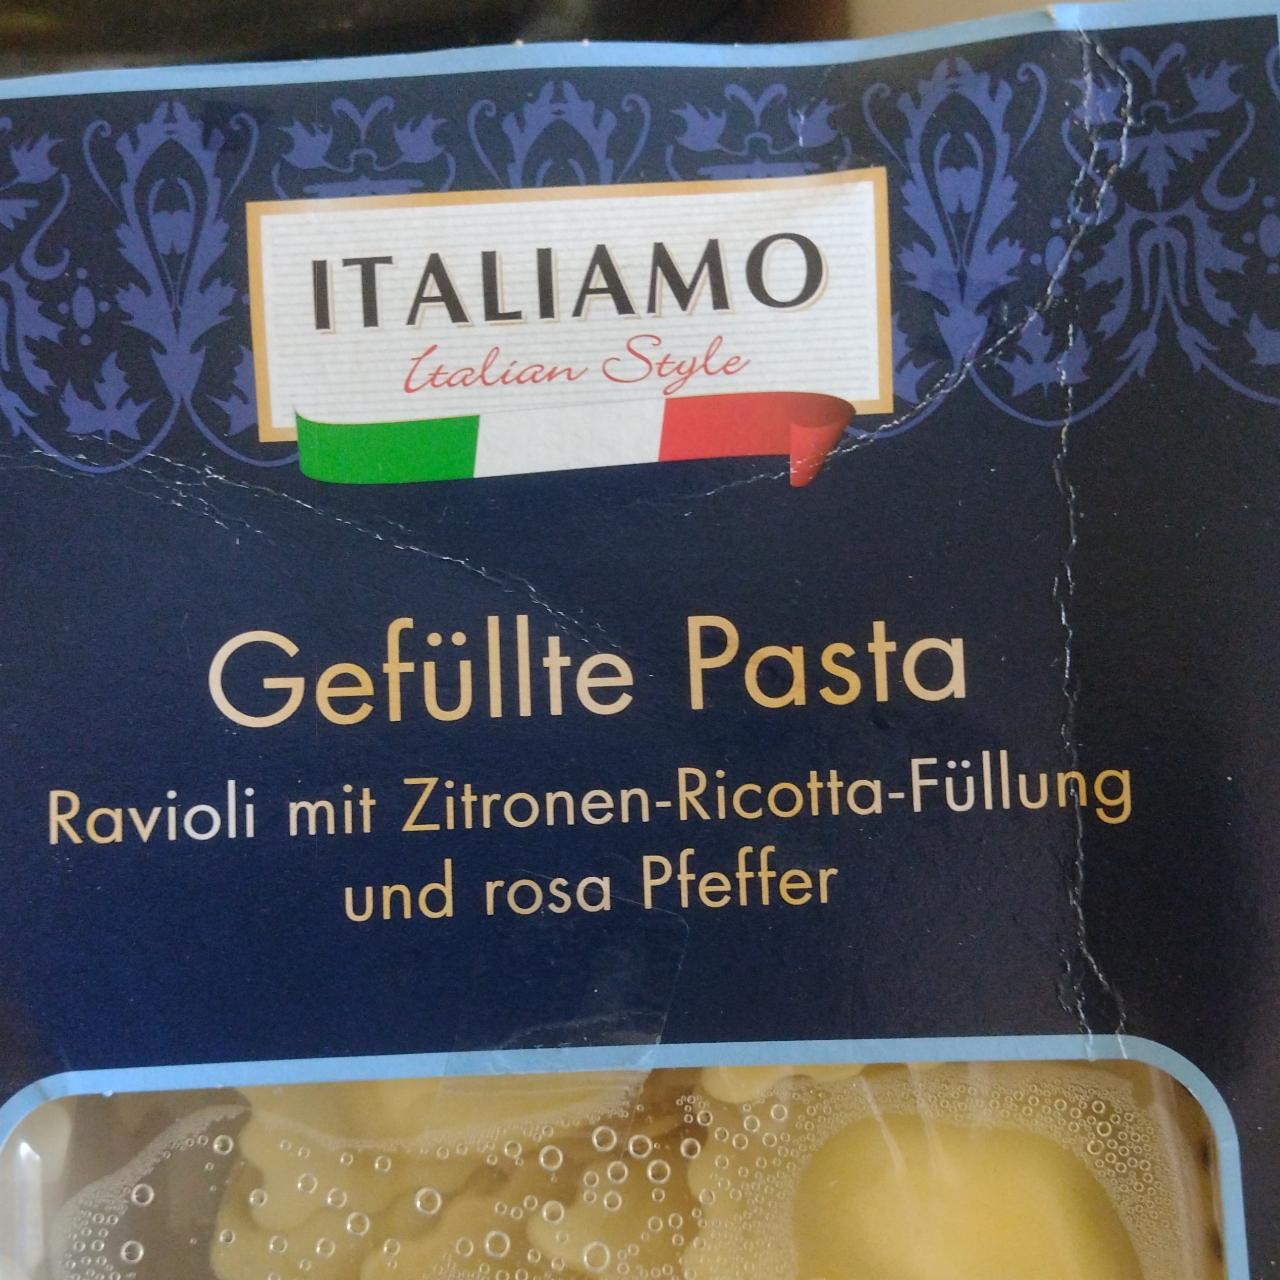 Gefüllte Pasta Ravioli mit Zitronen-Ricotta-Füllung Pfeffer - kJ und rosa kalorie, a Italiamo nutriční hodnoty